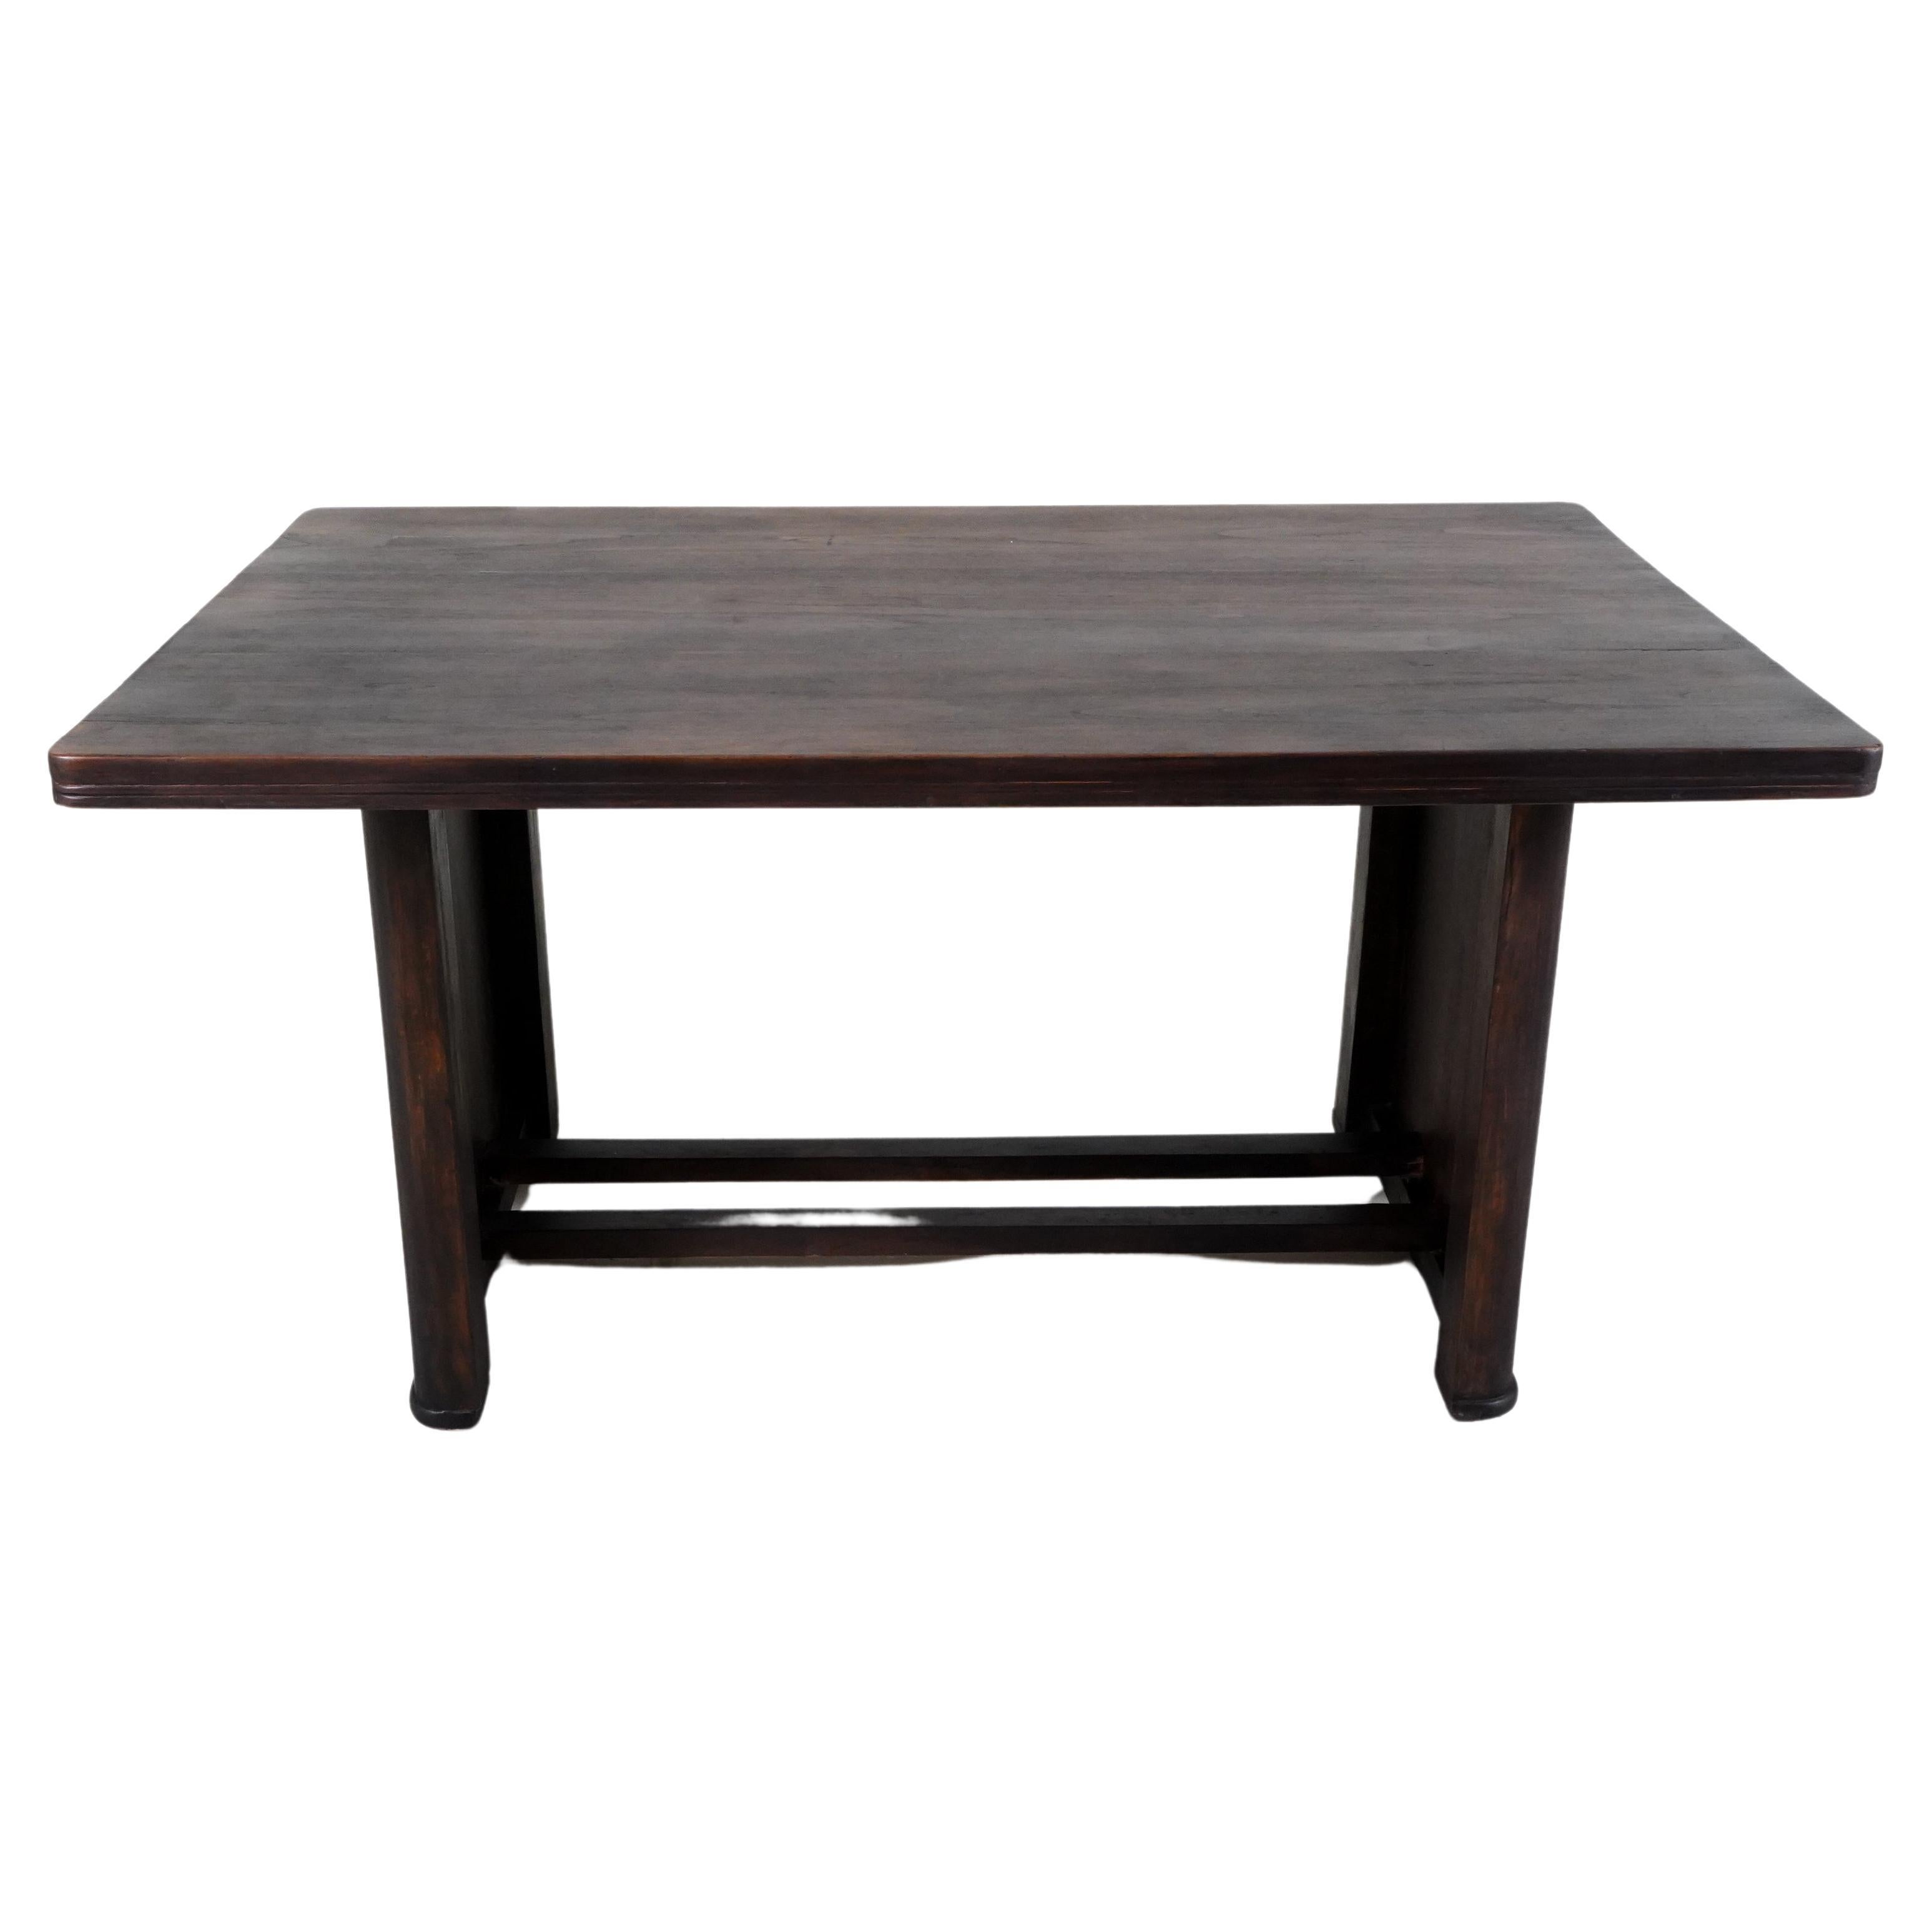 A Burmese Teak Wood Desk For Sale